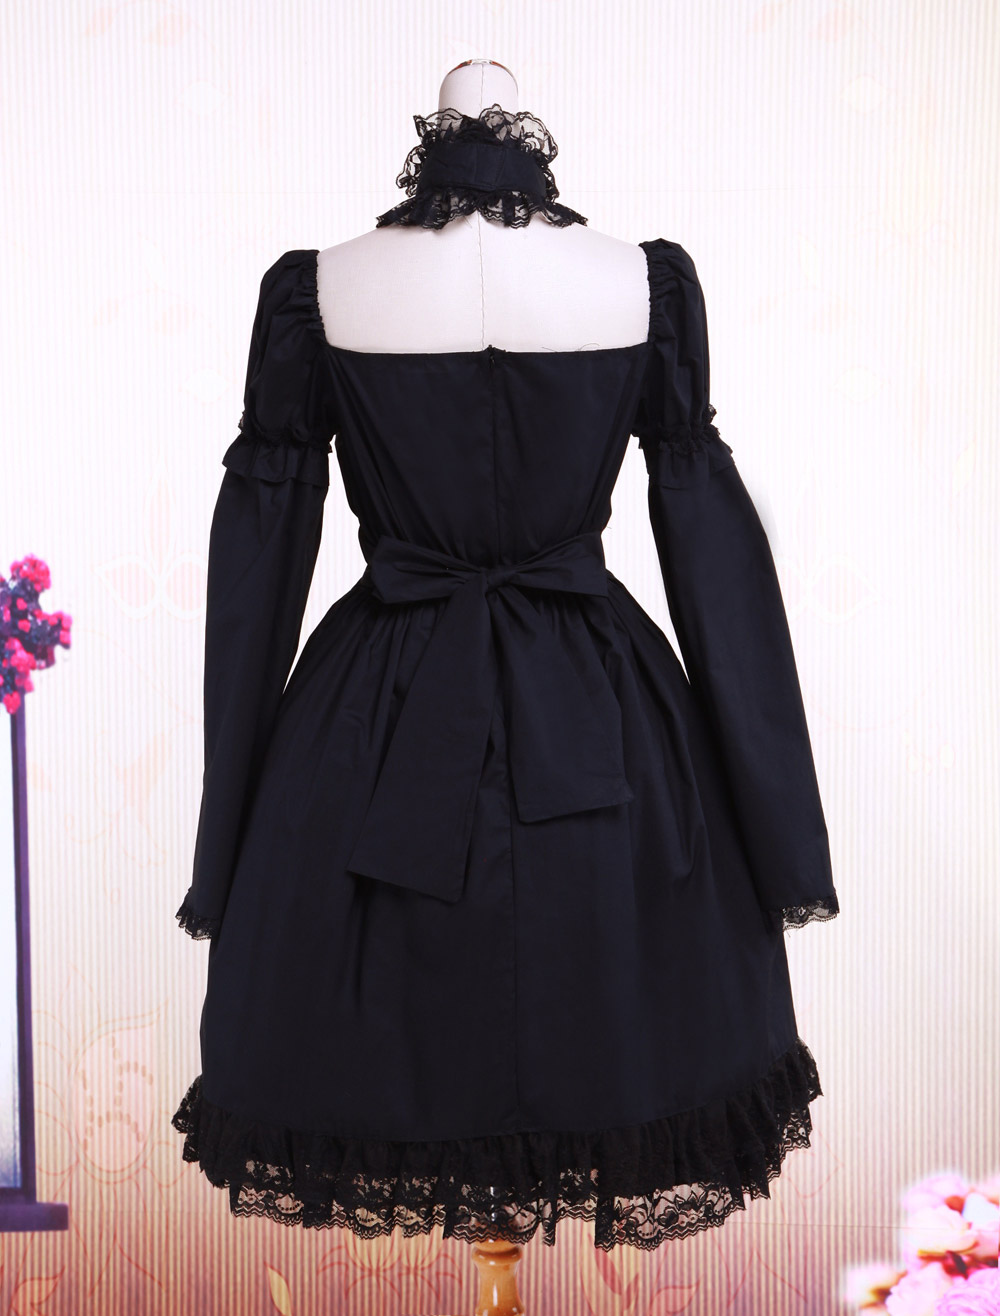 Cotton Black Lolita OP Dress Long Sleeves Lace Trim - Milanoo.com